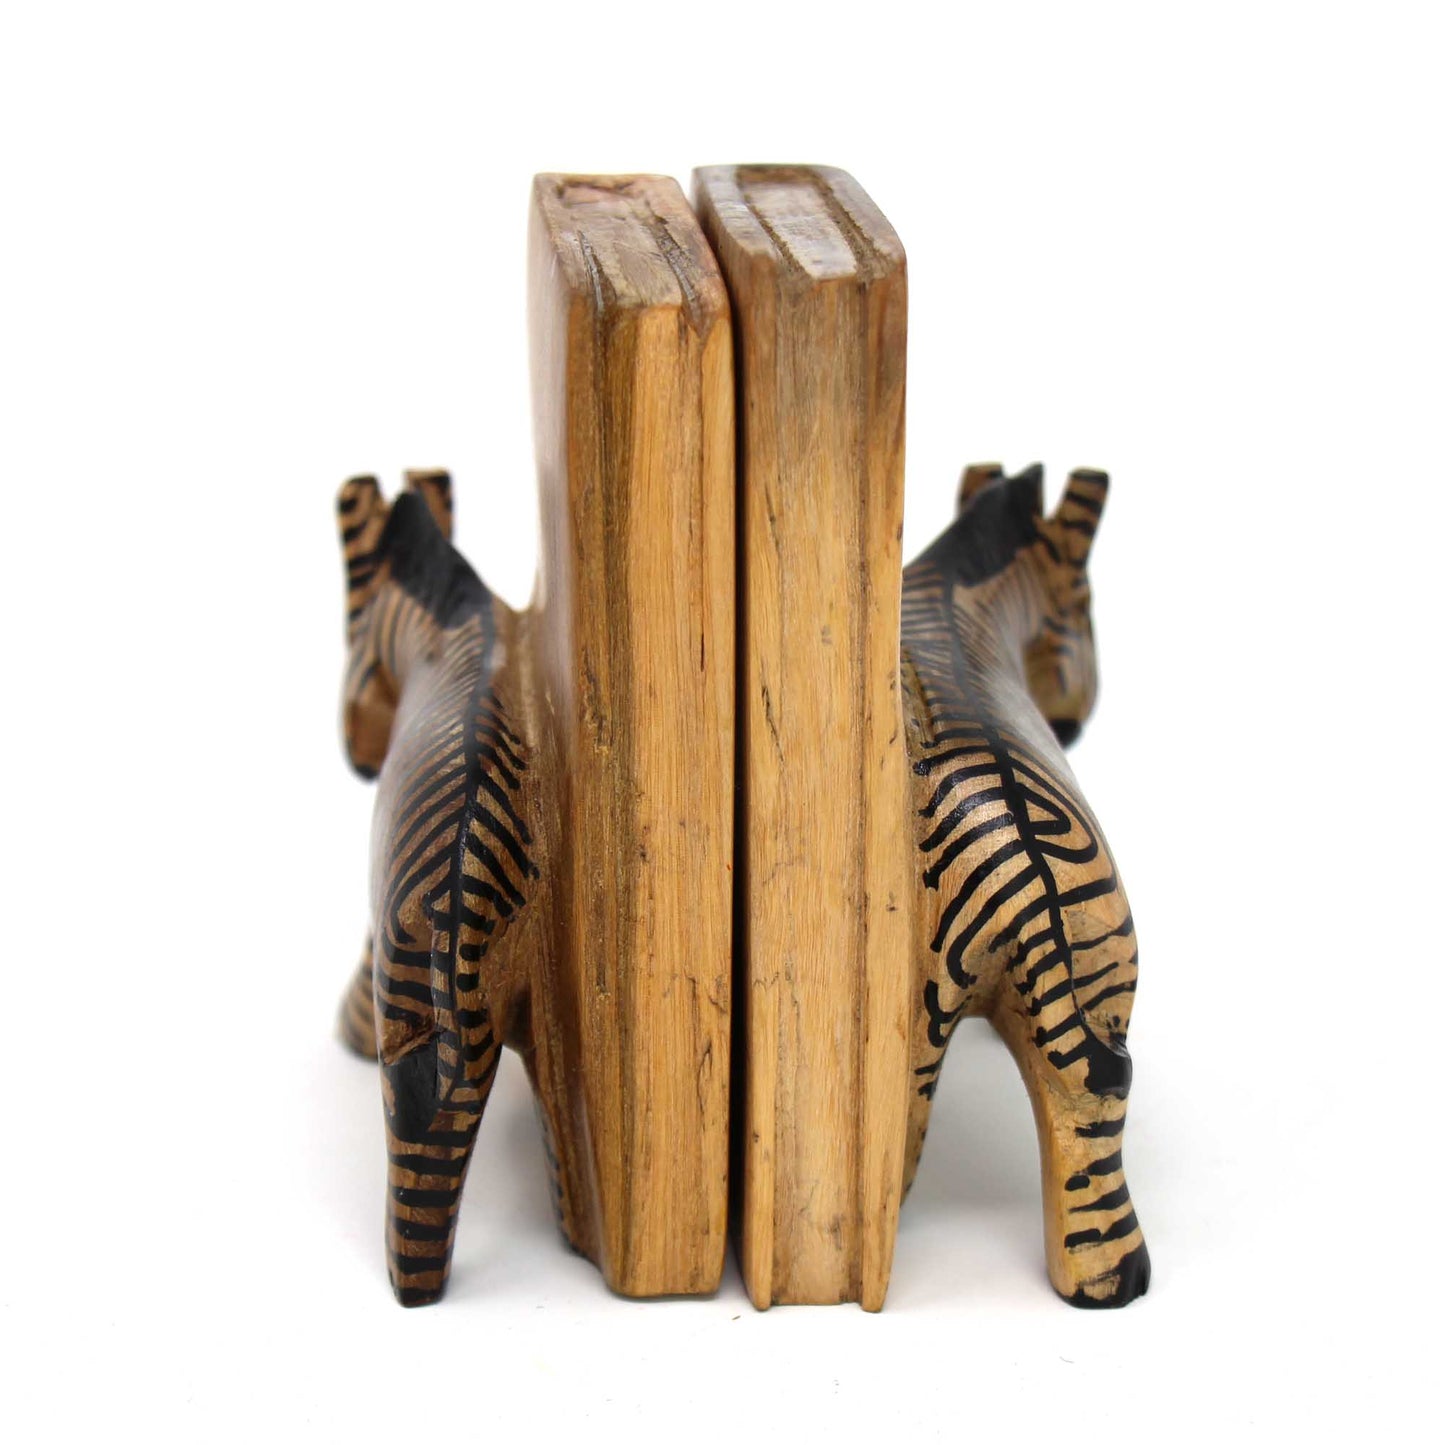 Jedando Handicrafts Carved Wood Zebra Book Ends